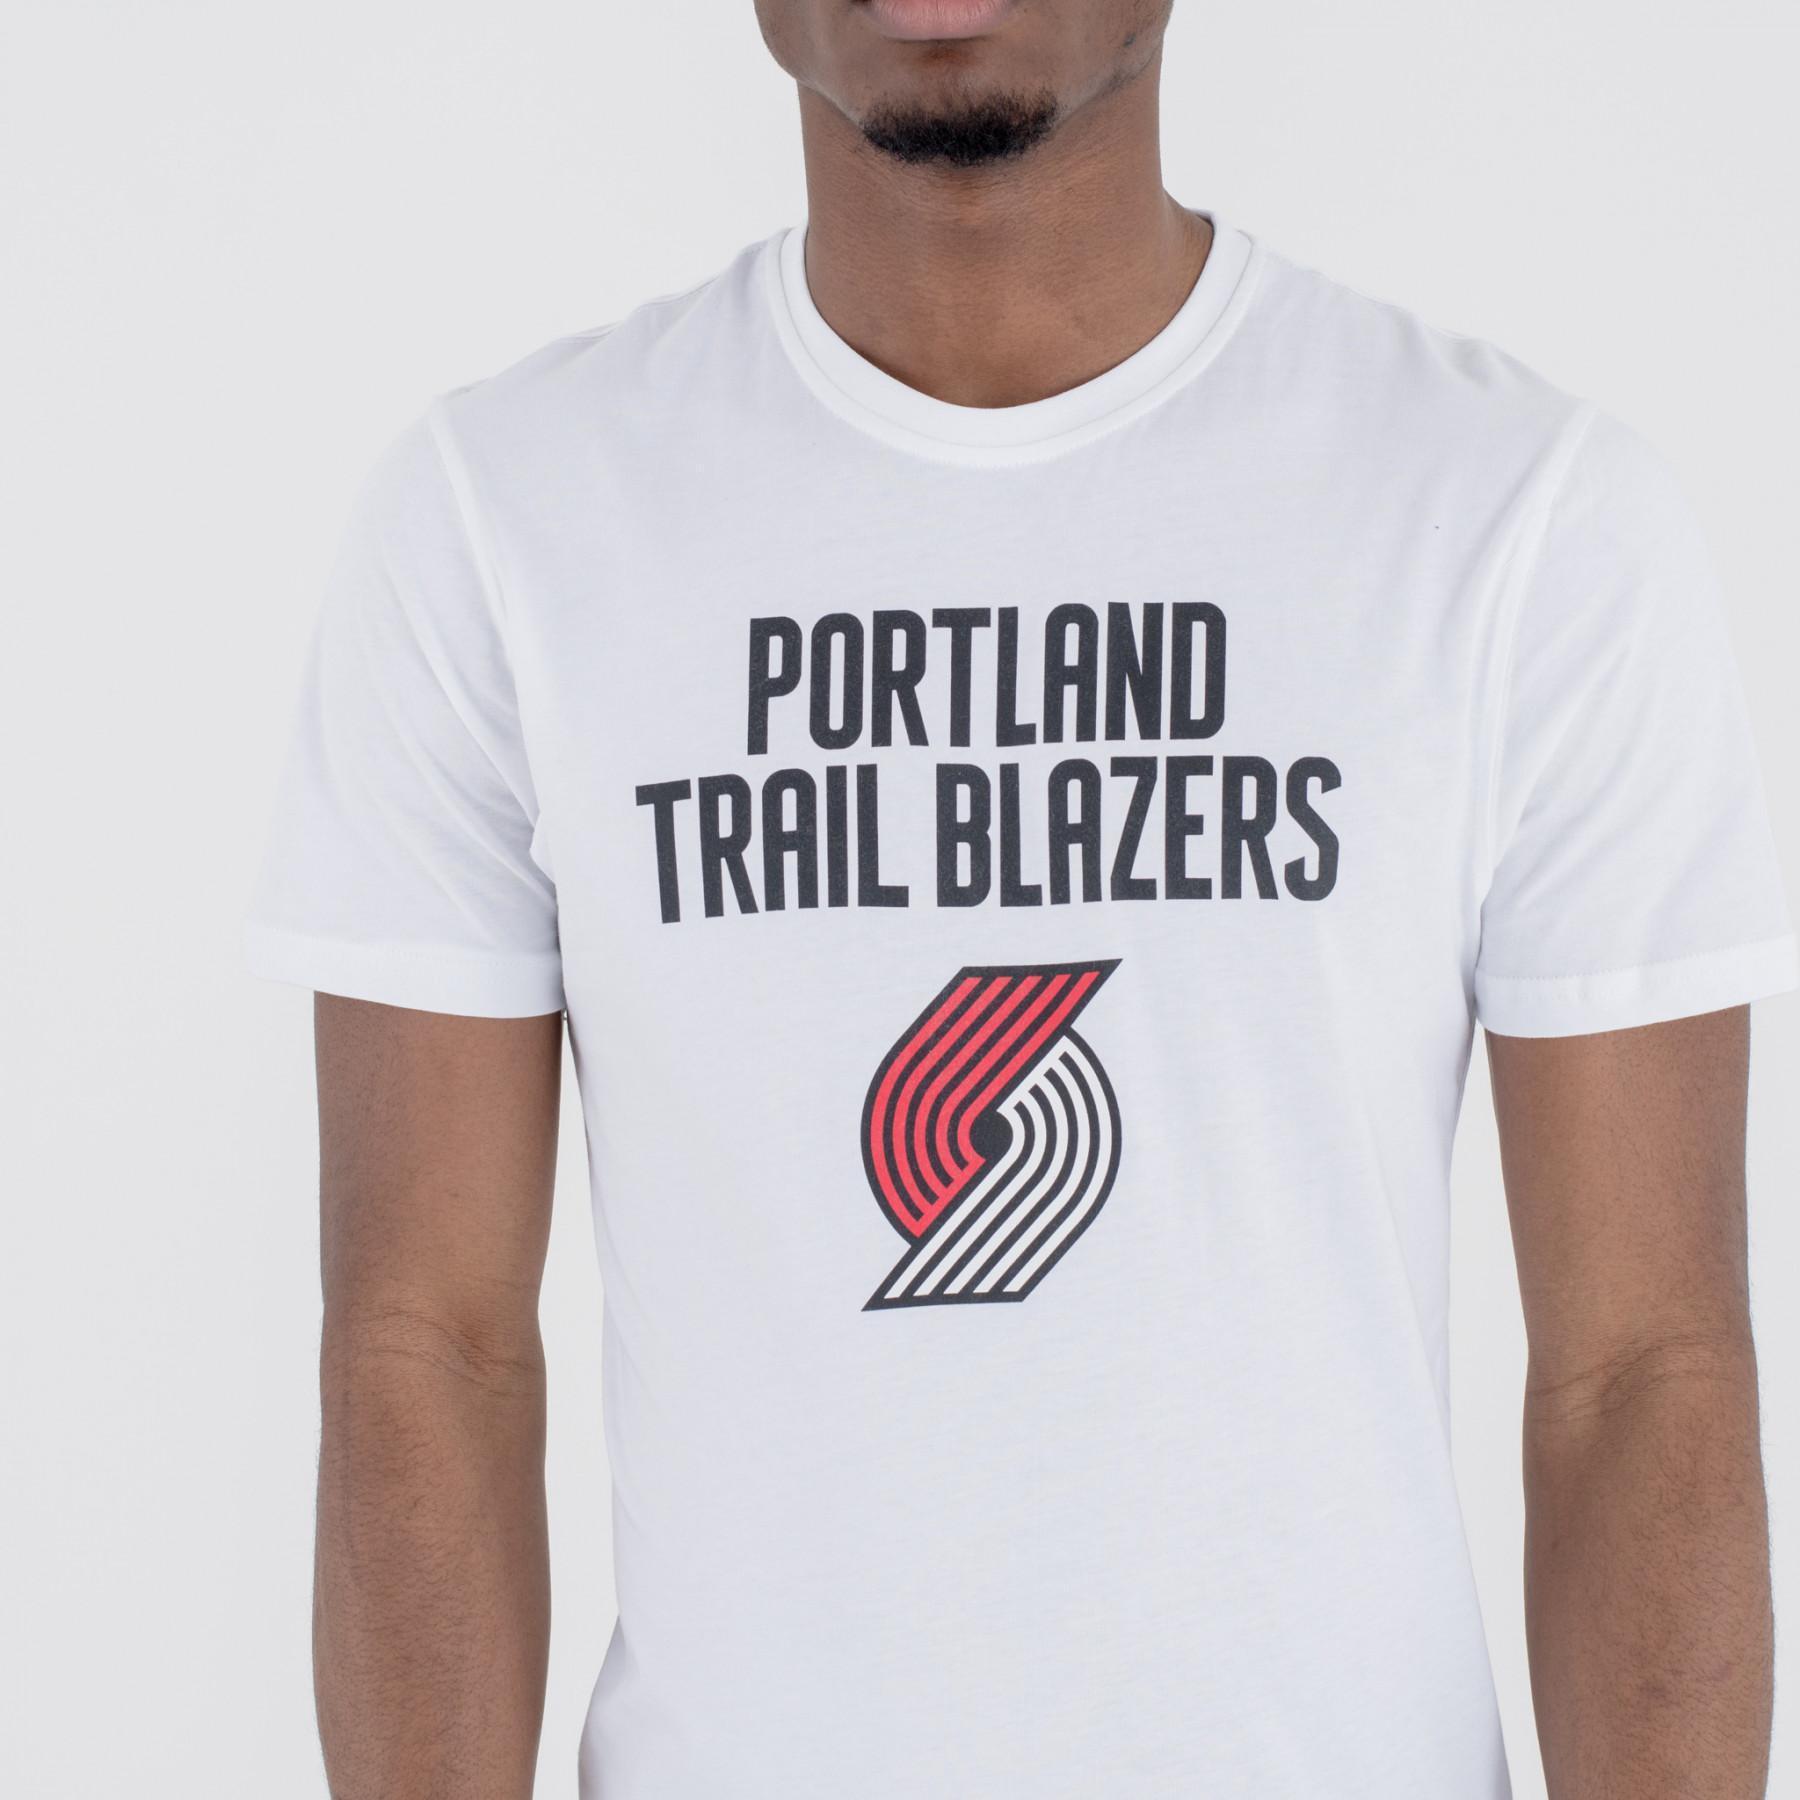  New EraT - s h i r t   logo Portland Trail Blazers